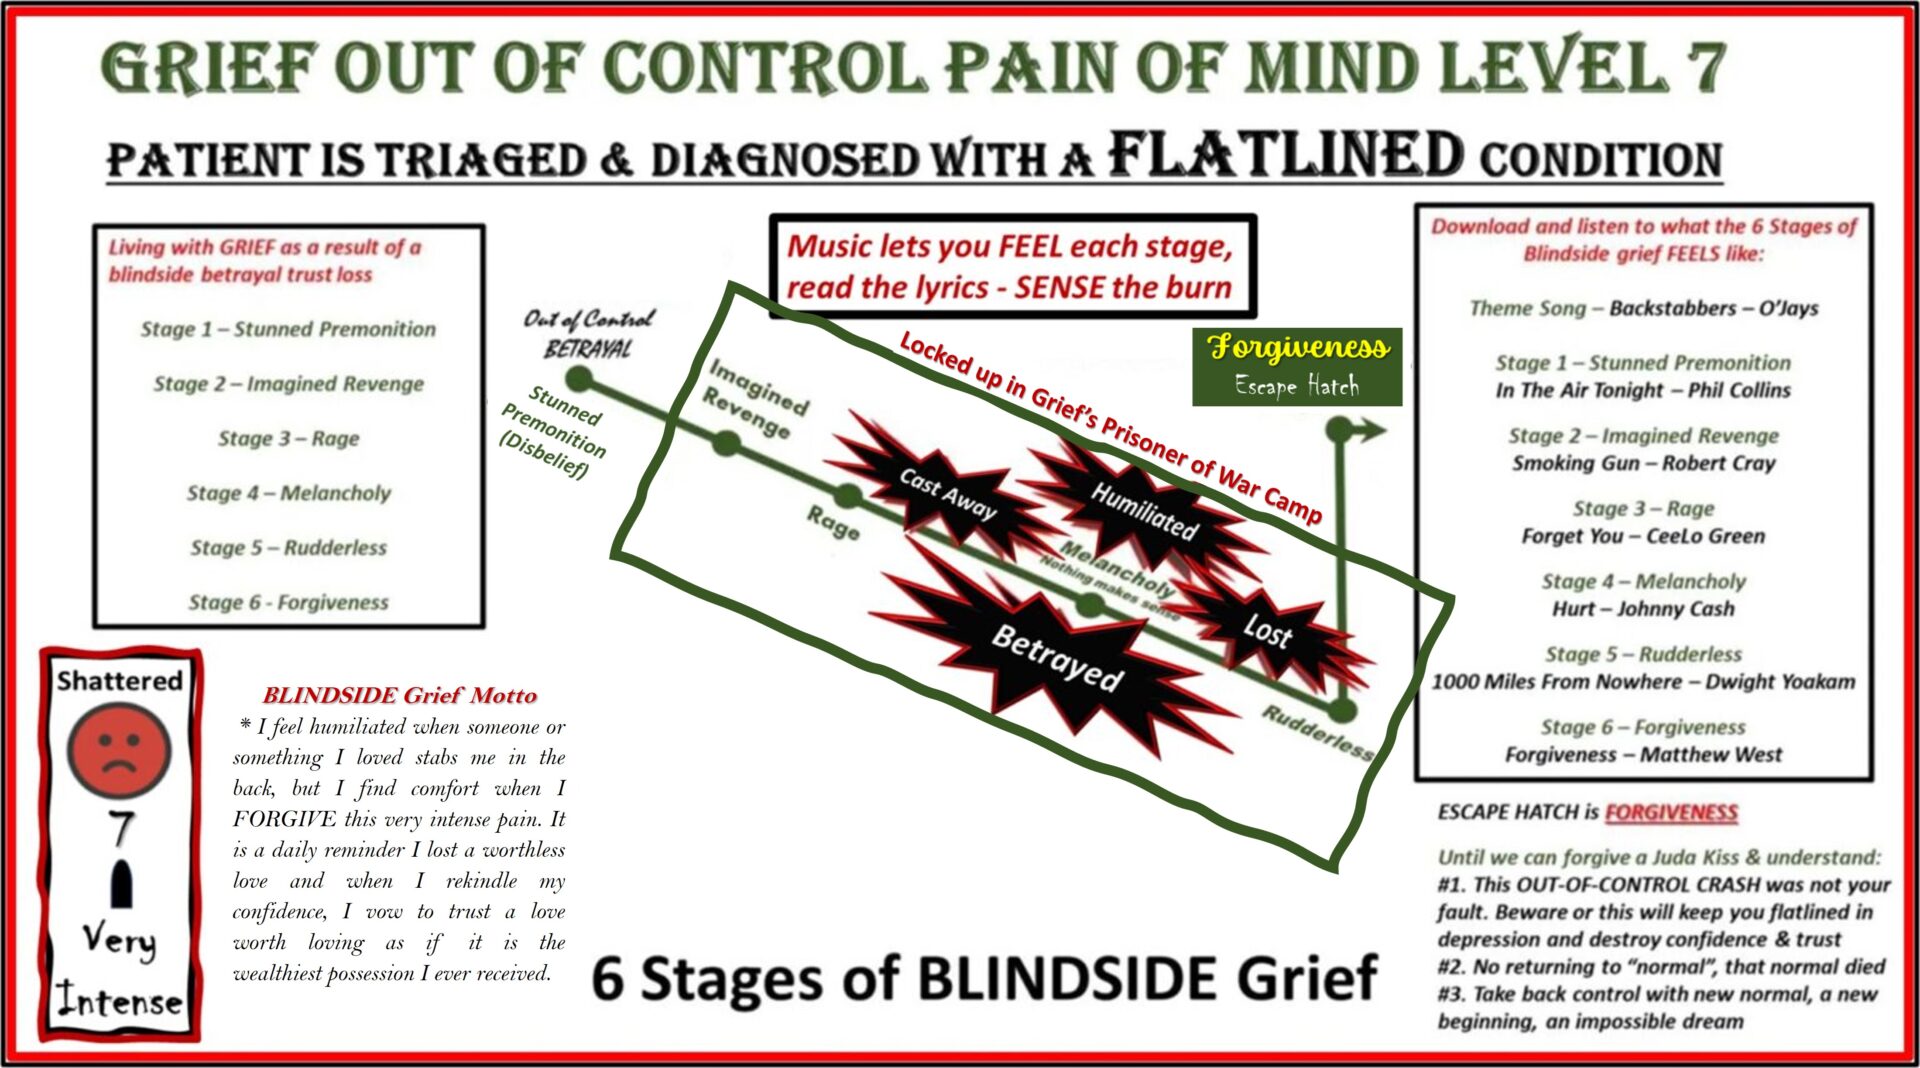 Level 7 - The 6 Stages of Blindside Grief